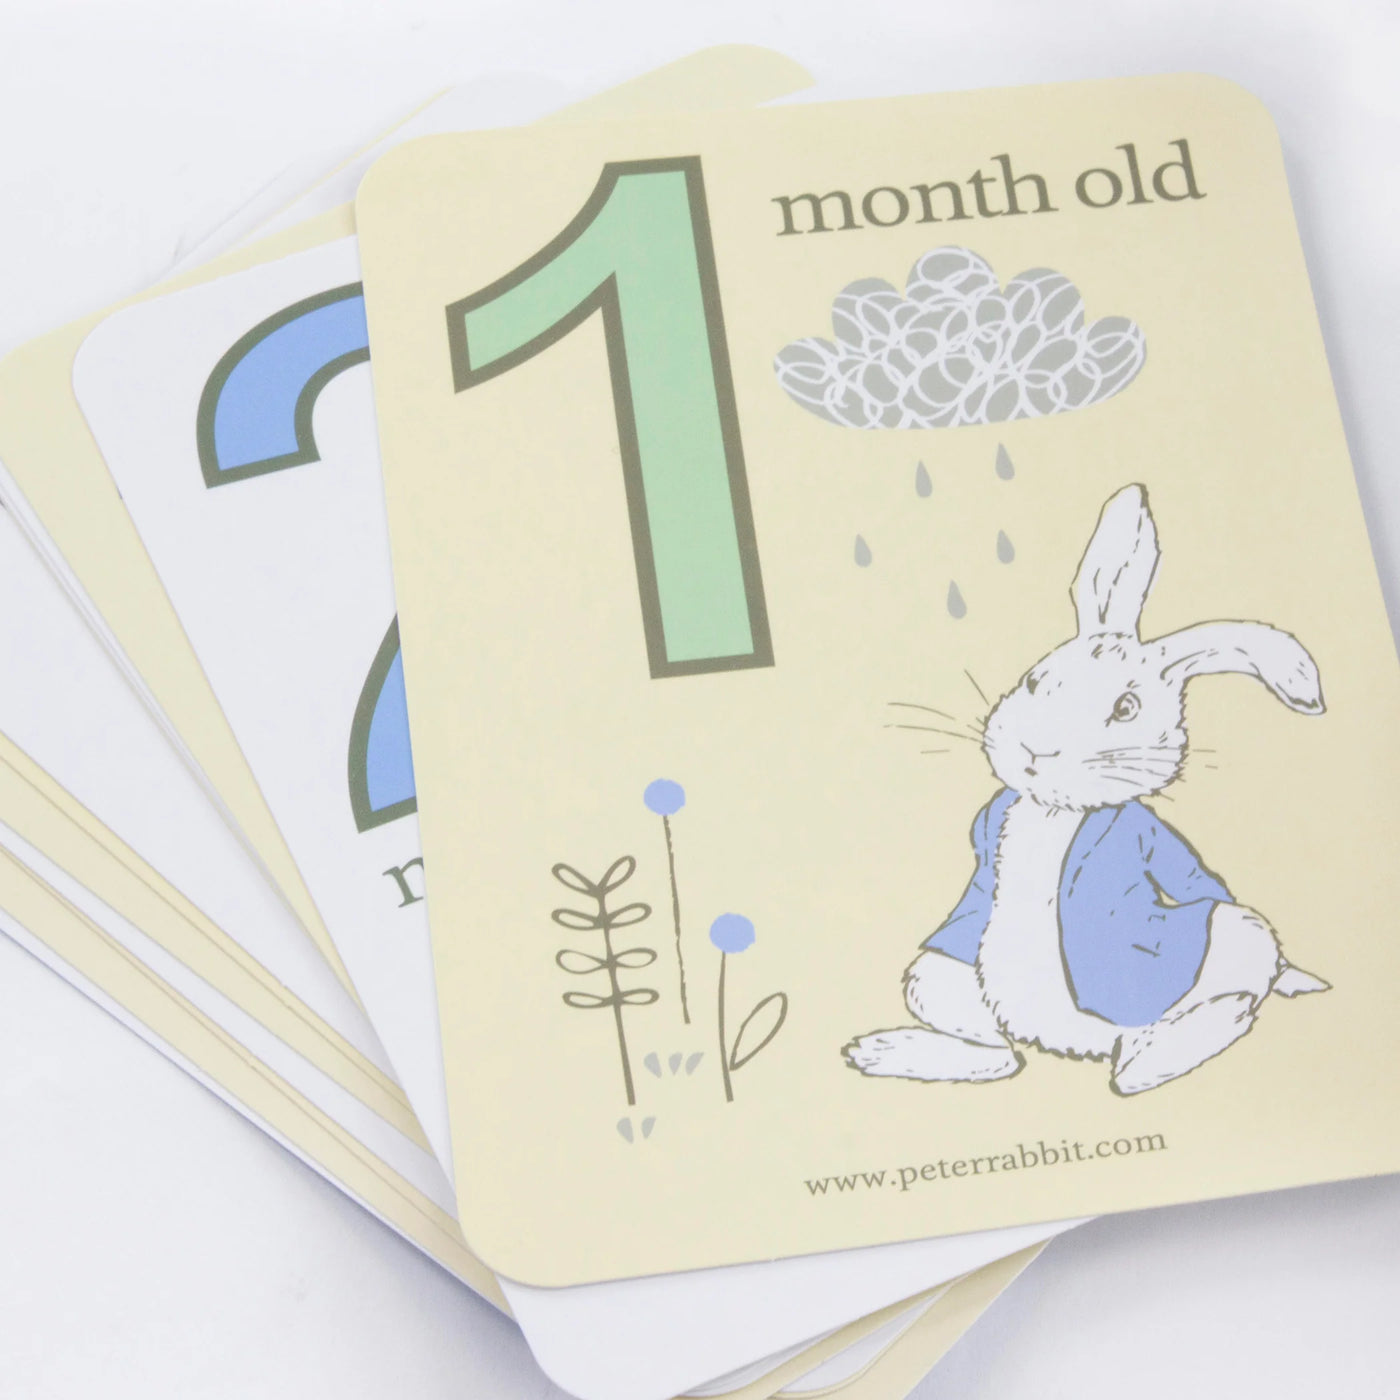 Bubba Blue Peter Rabbit 'Cloud' 2 Pack Muslin Wraps & Milestone Cards Set - Pink